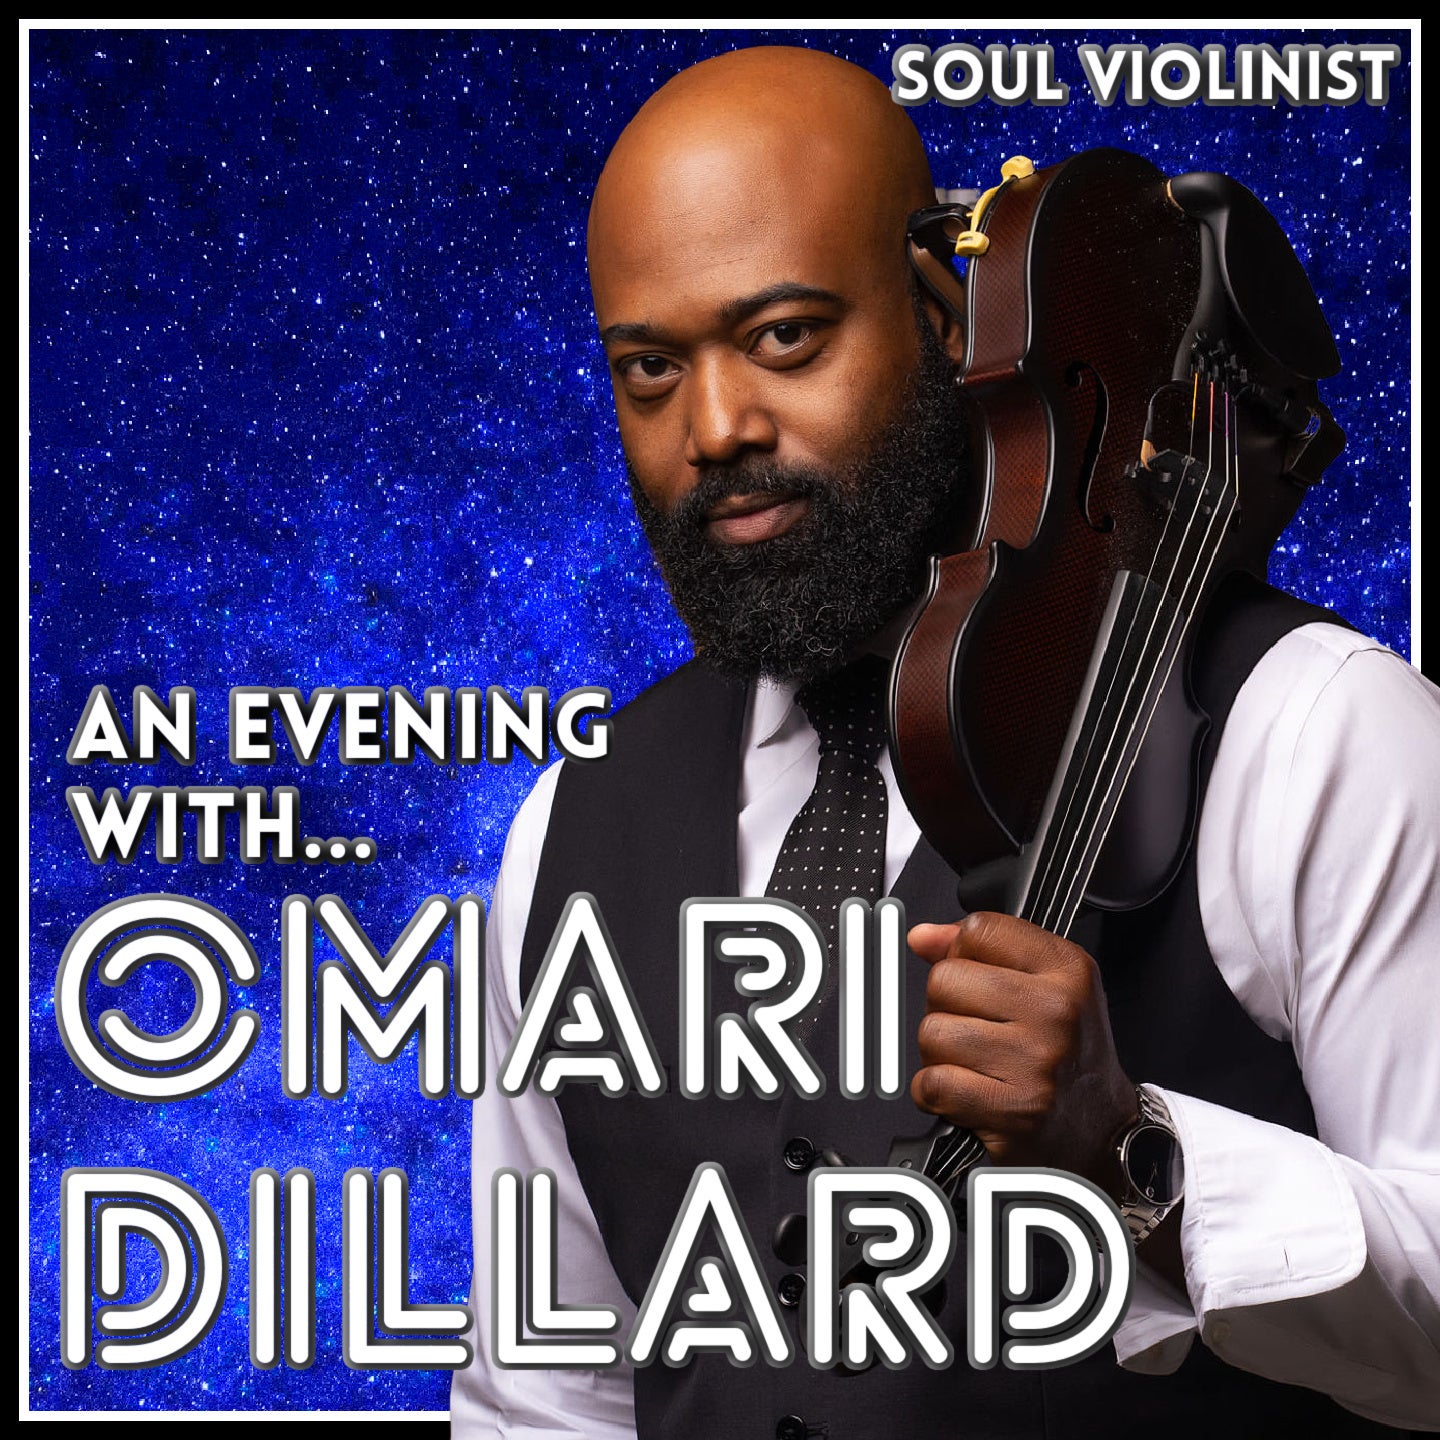 An Evening with Omari Dillard: Soul Violinist